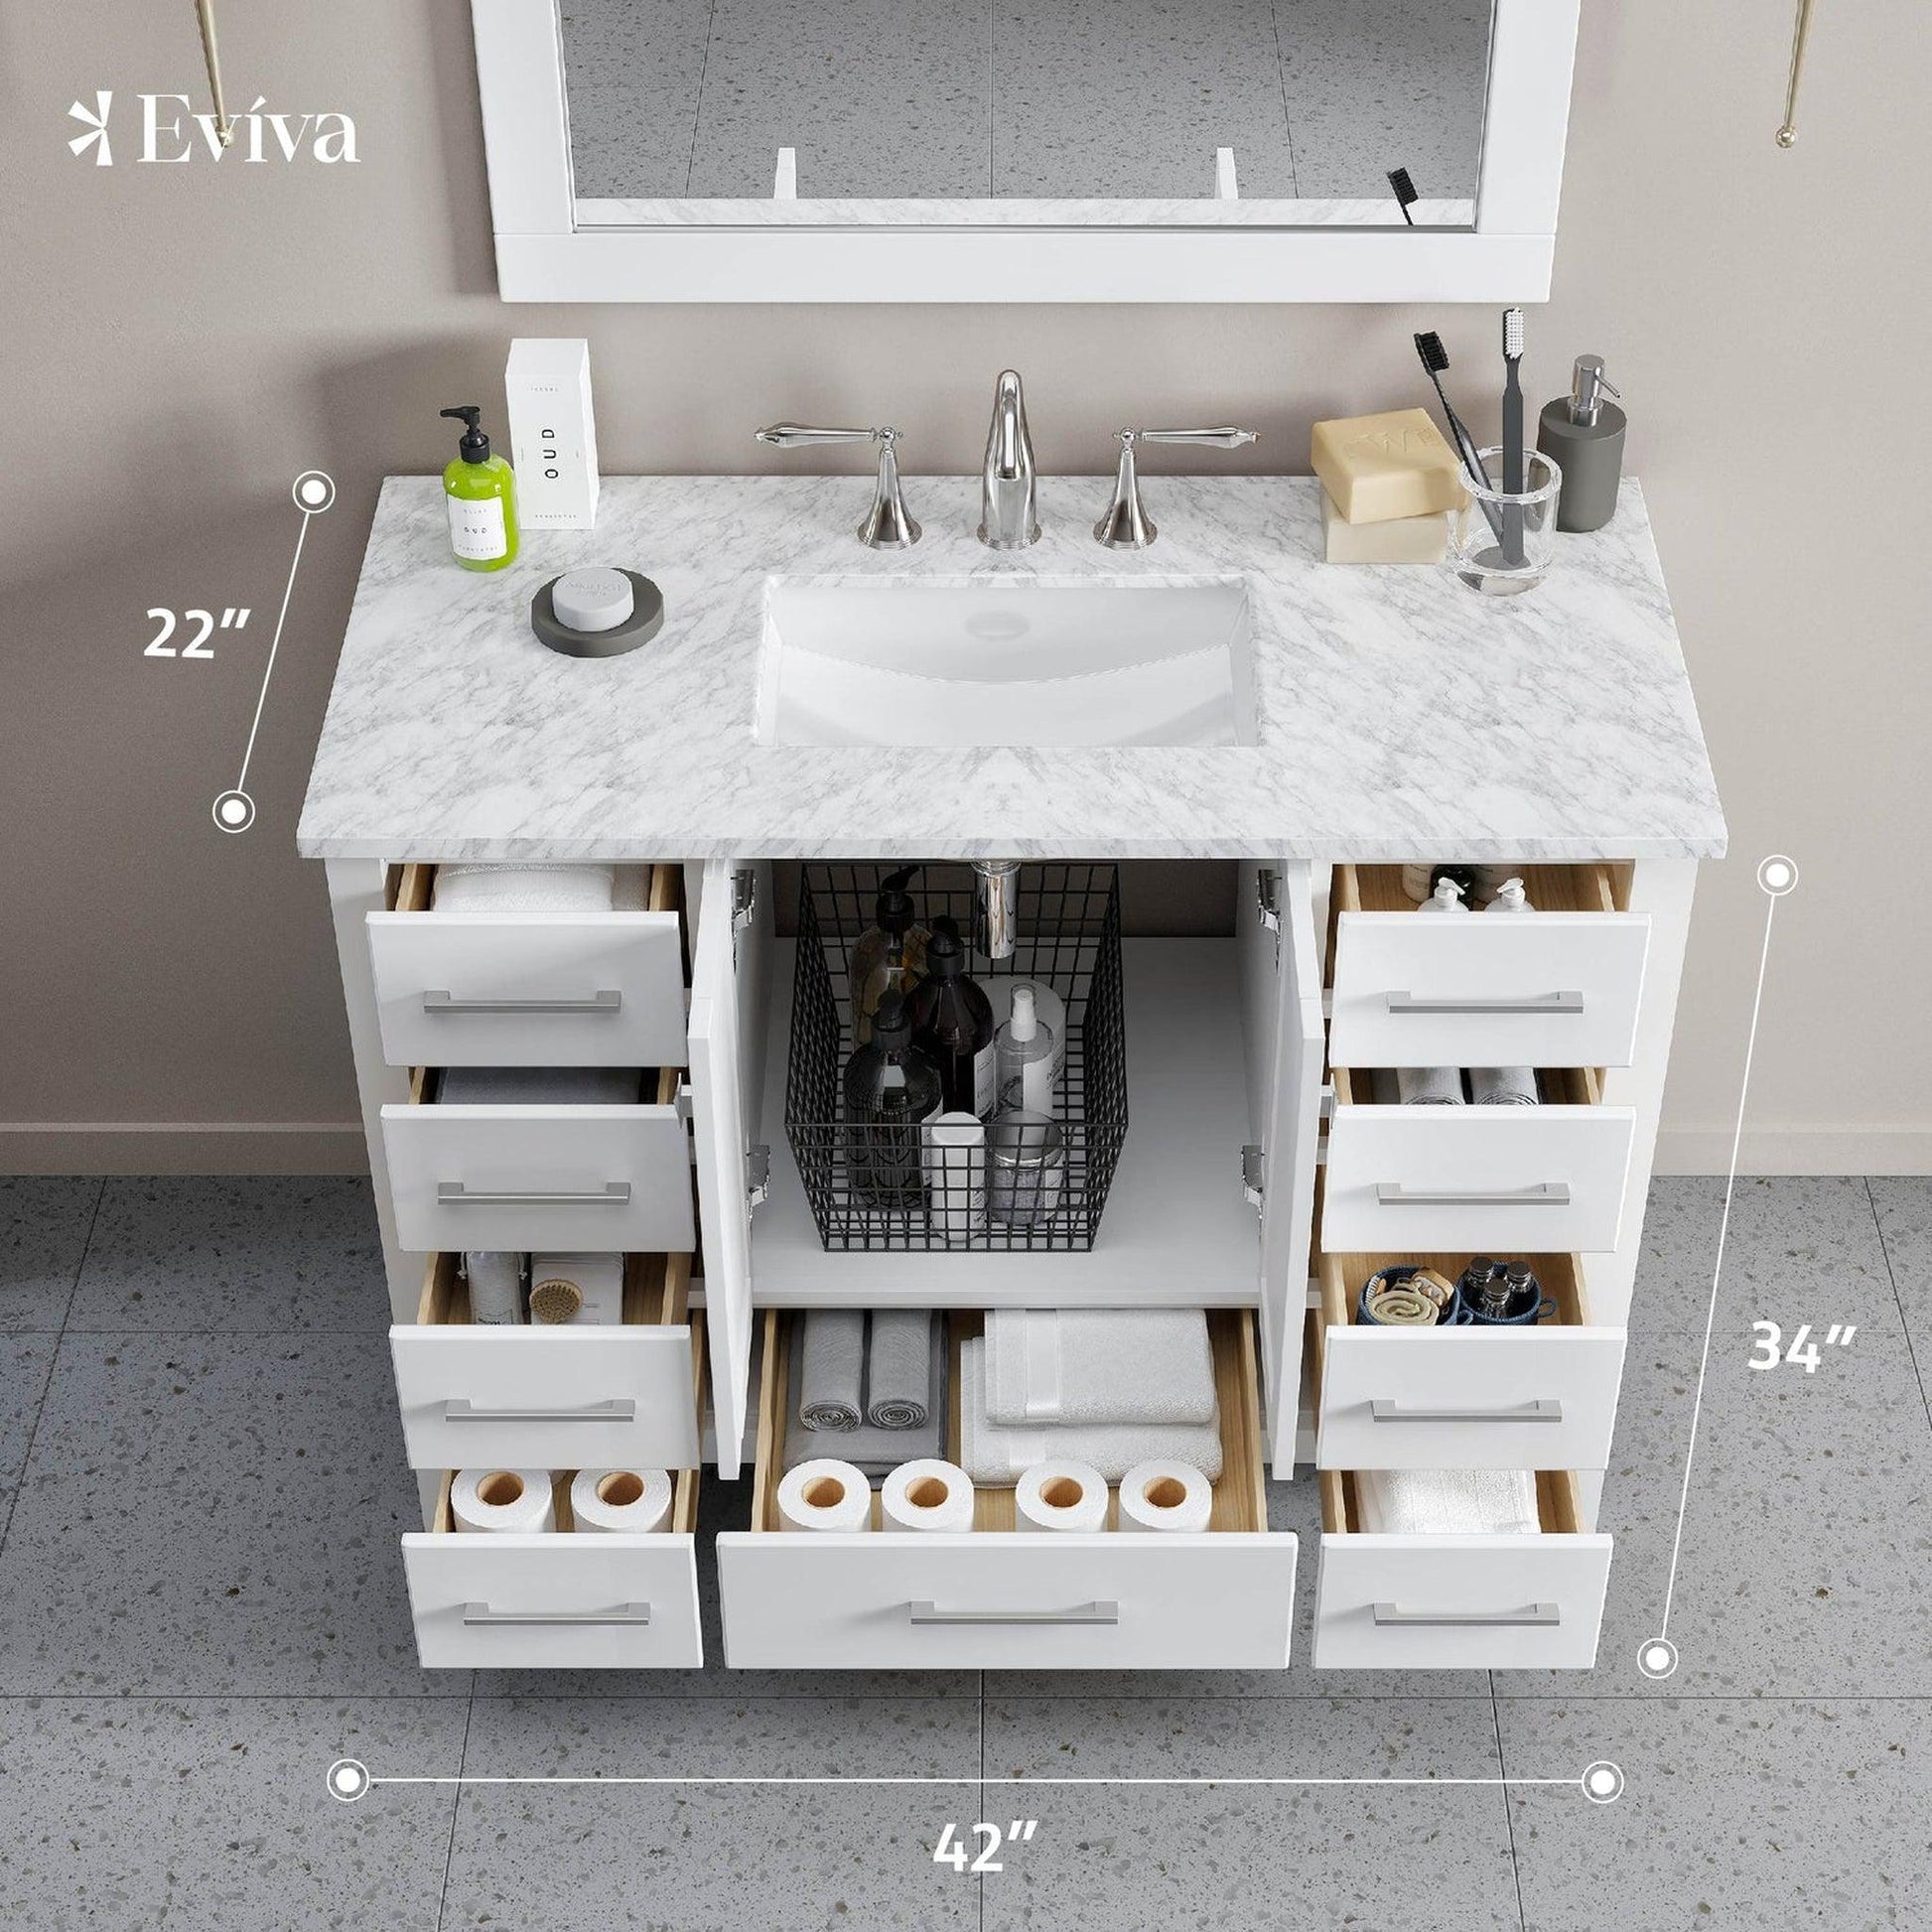 Eviva Aberdeen 48" x 34" White Freestanding Bathroom Vanity With Single Undermount Sink